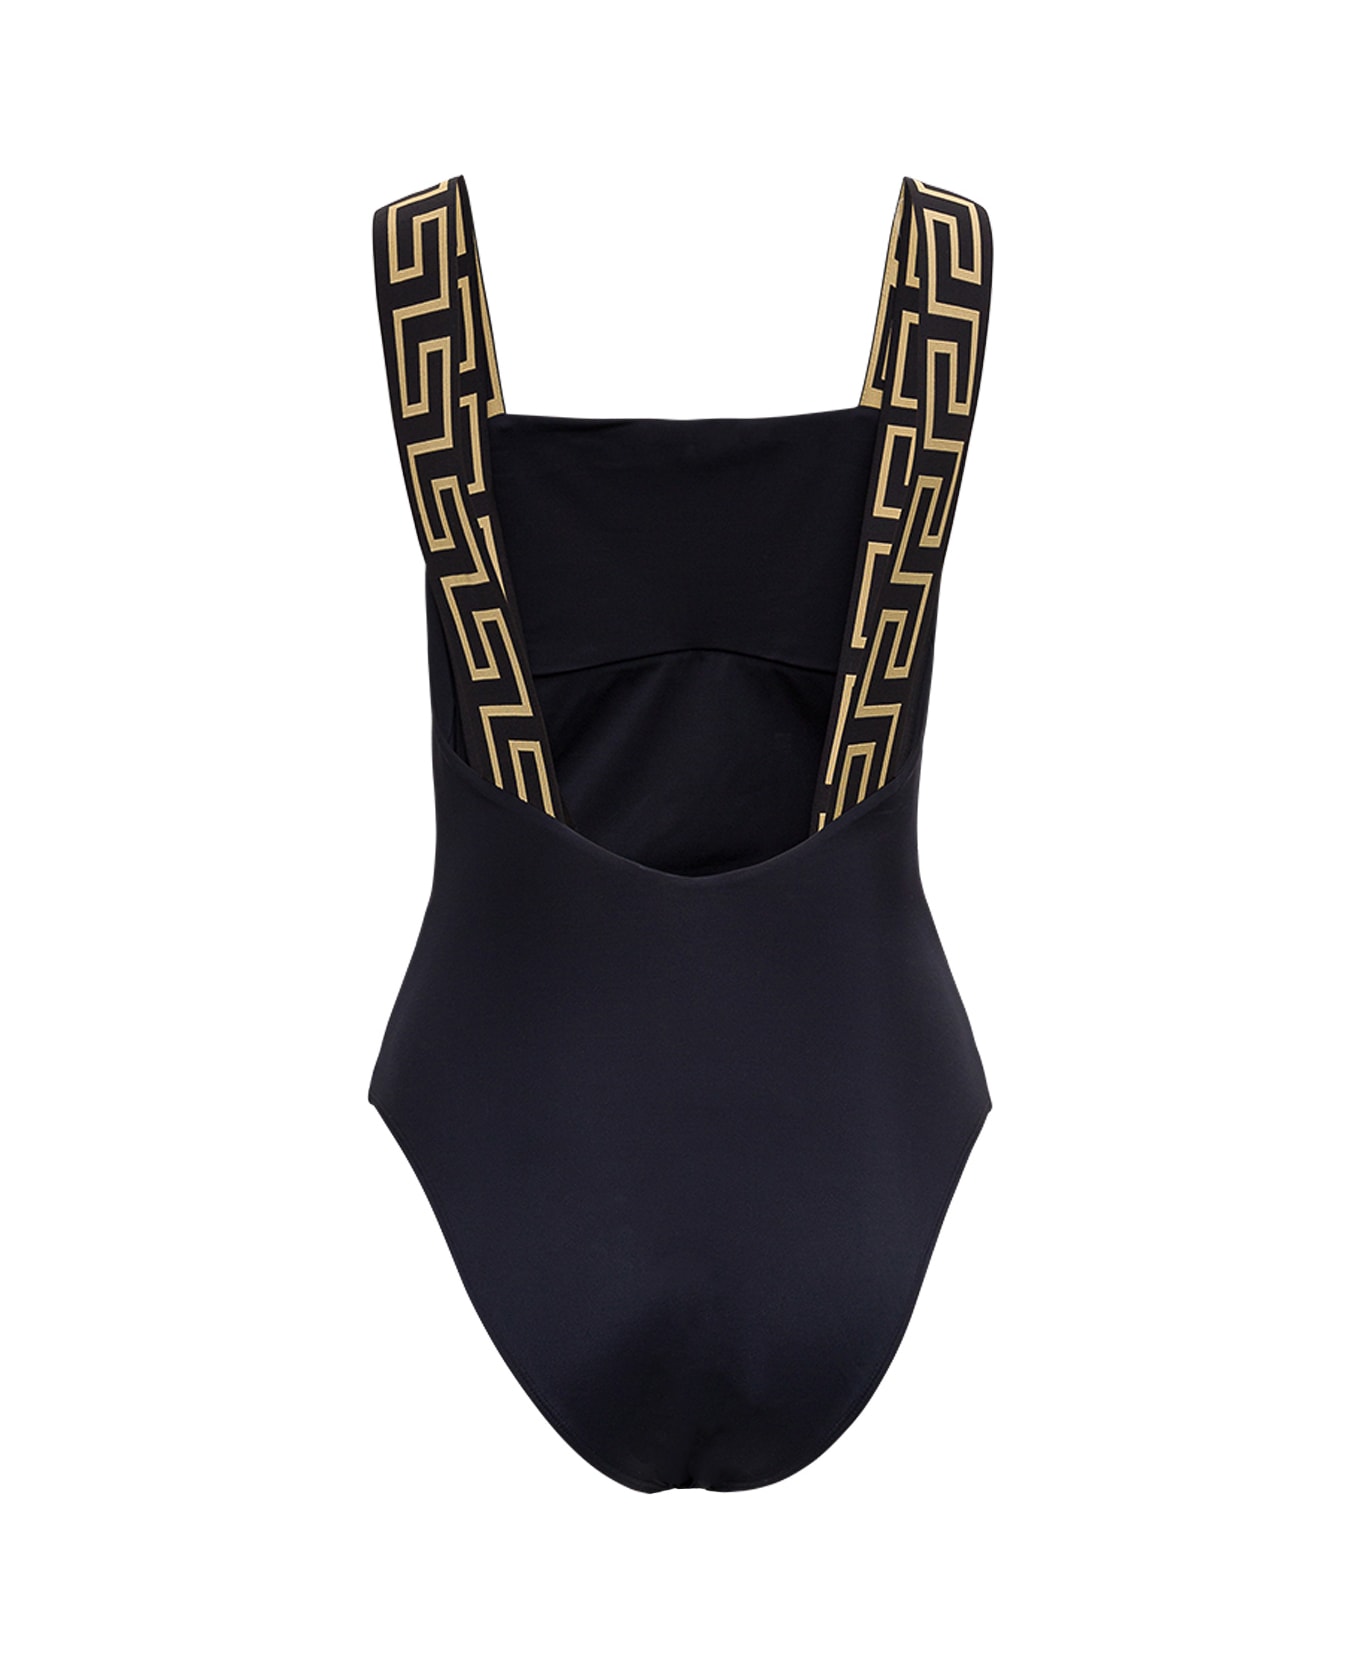 Versace One-piece Swimsuit With Greca Straps - Black